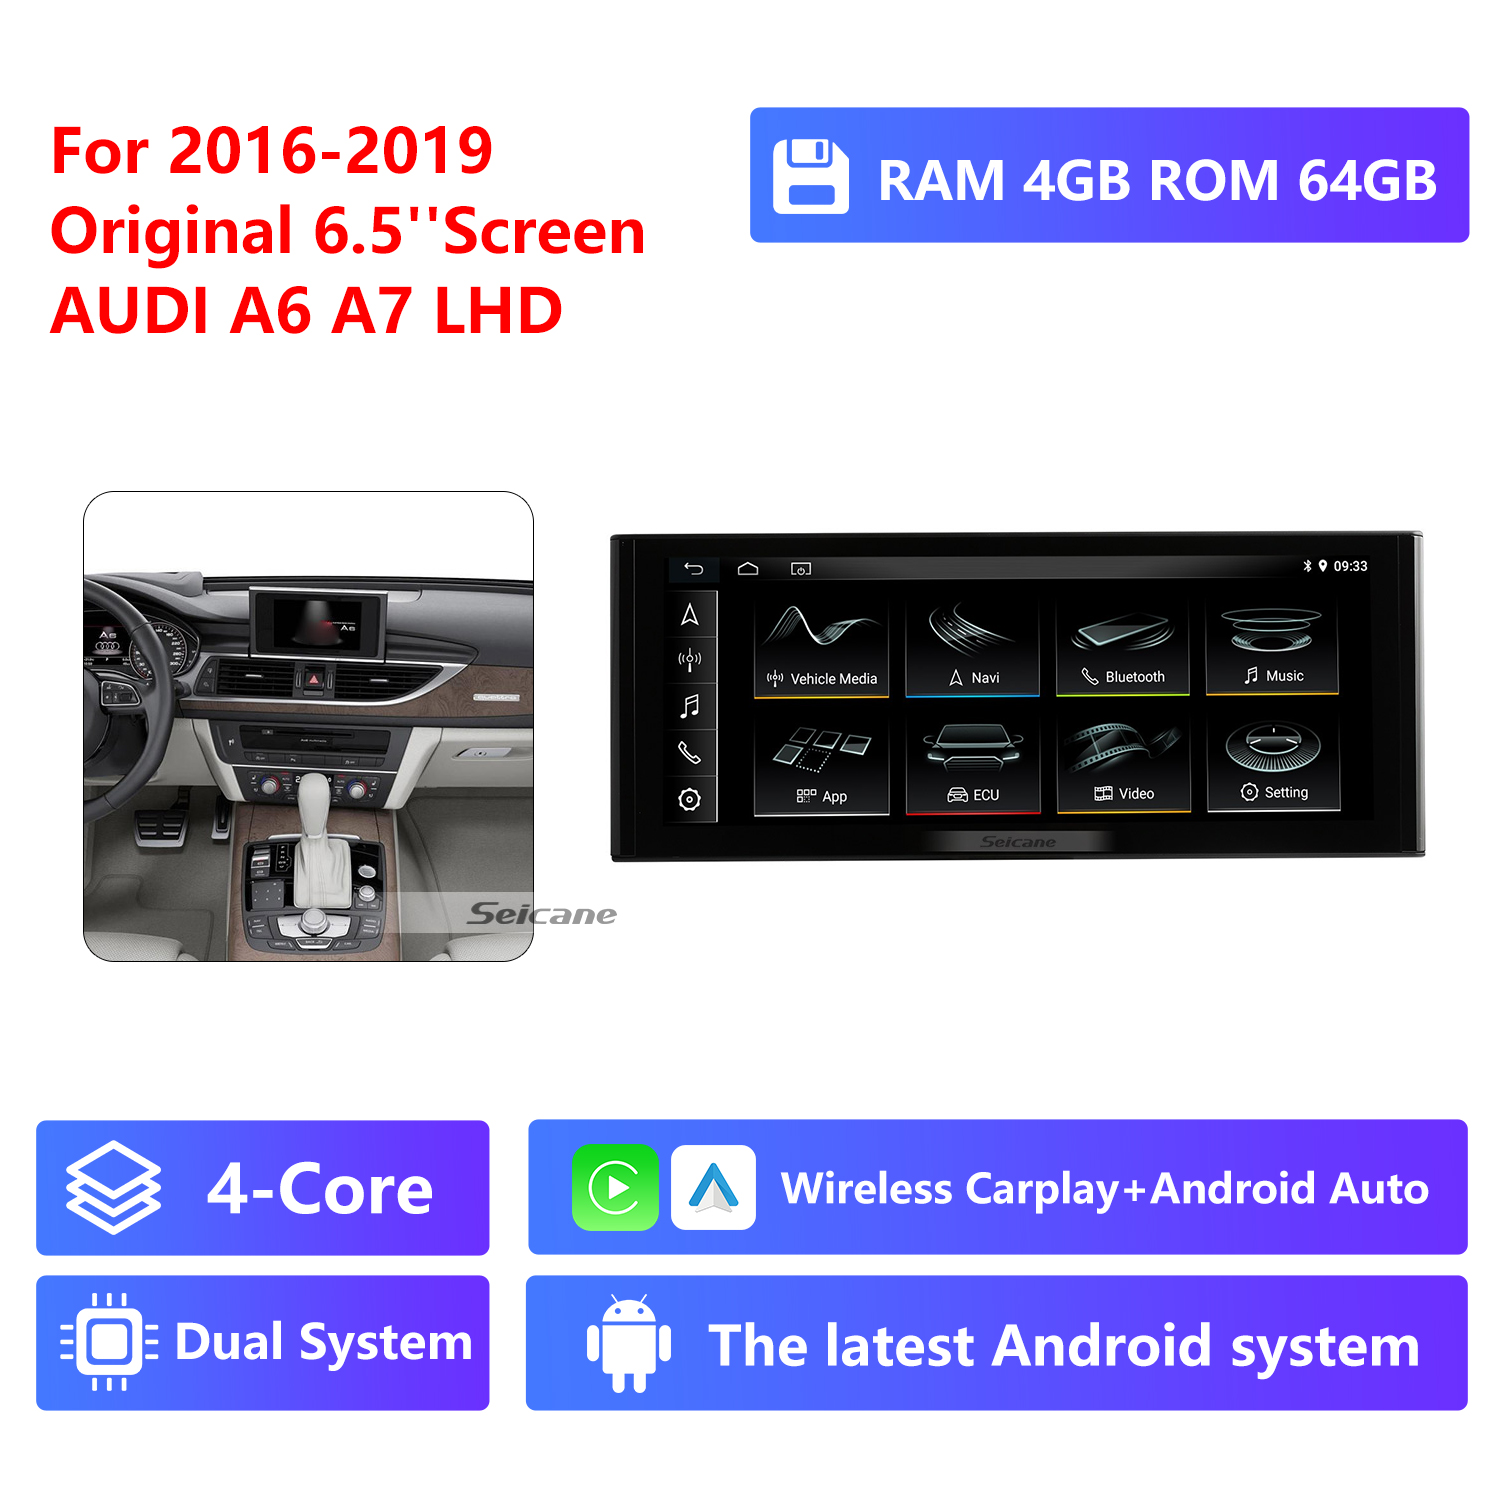 4-Core RAM 4G ROM 64G,2016-2019, Original 6.5"Screen,LHD